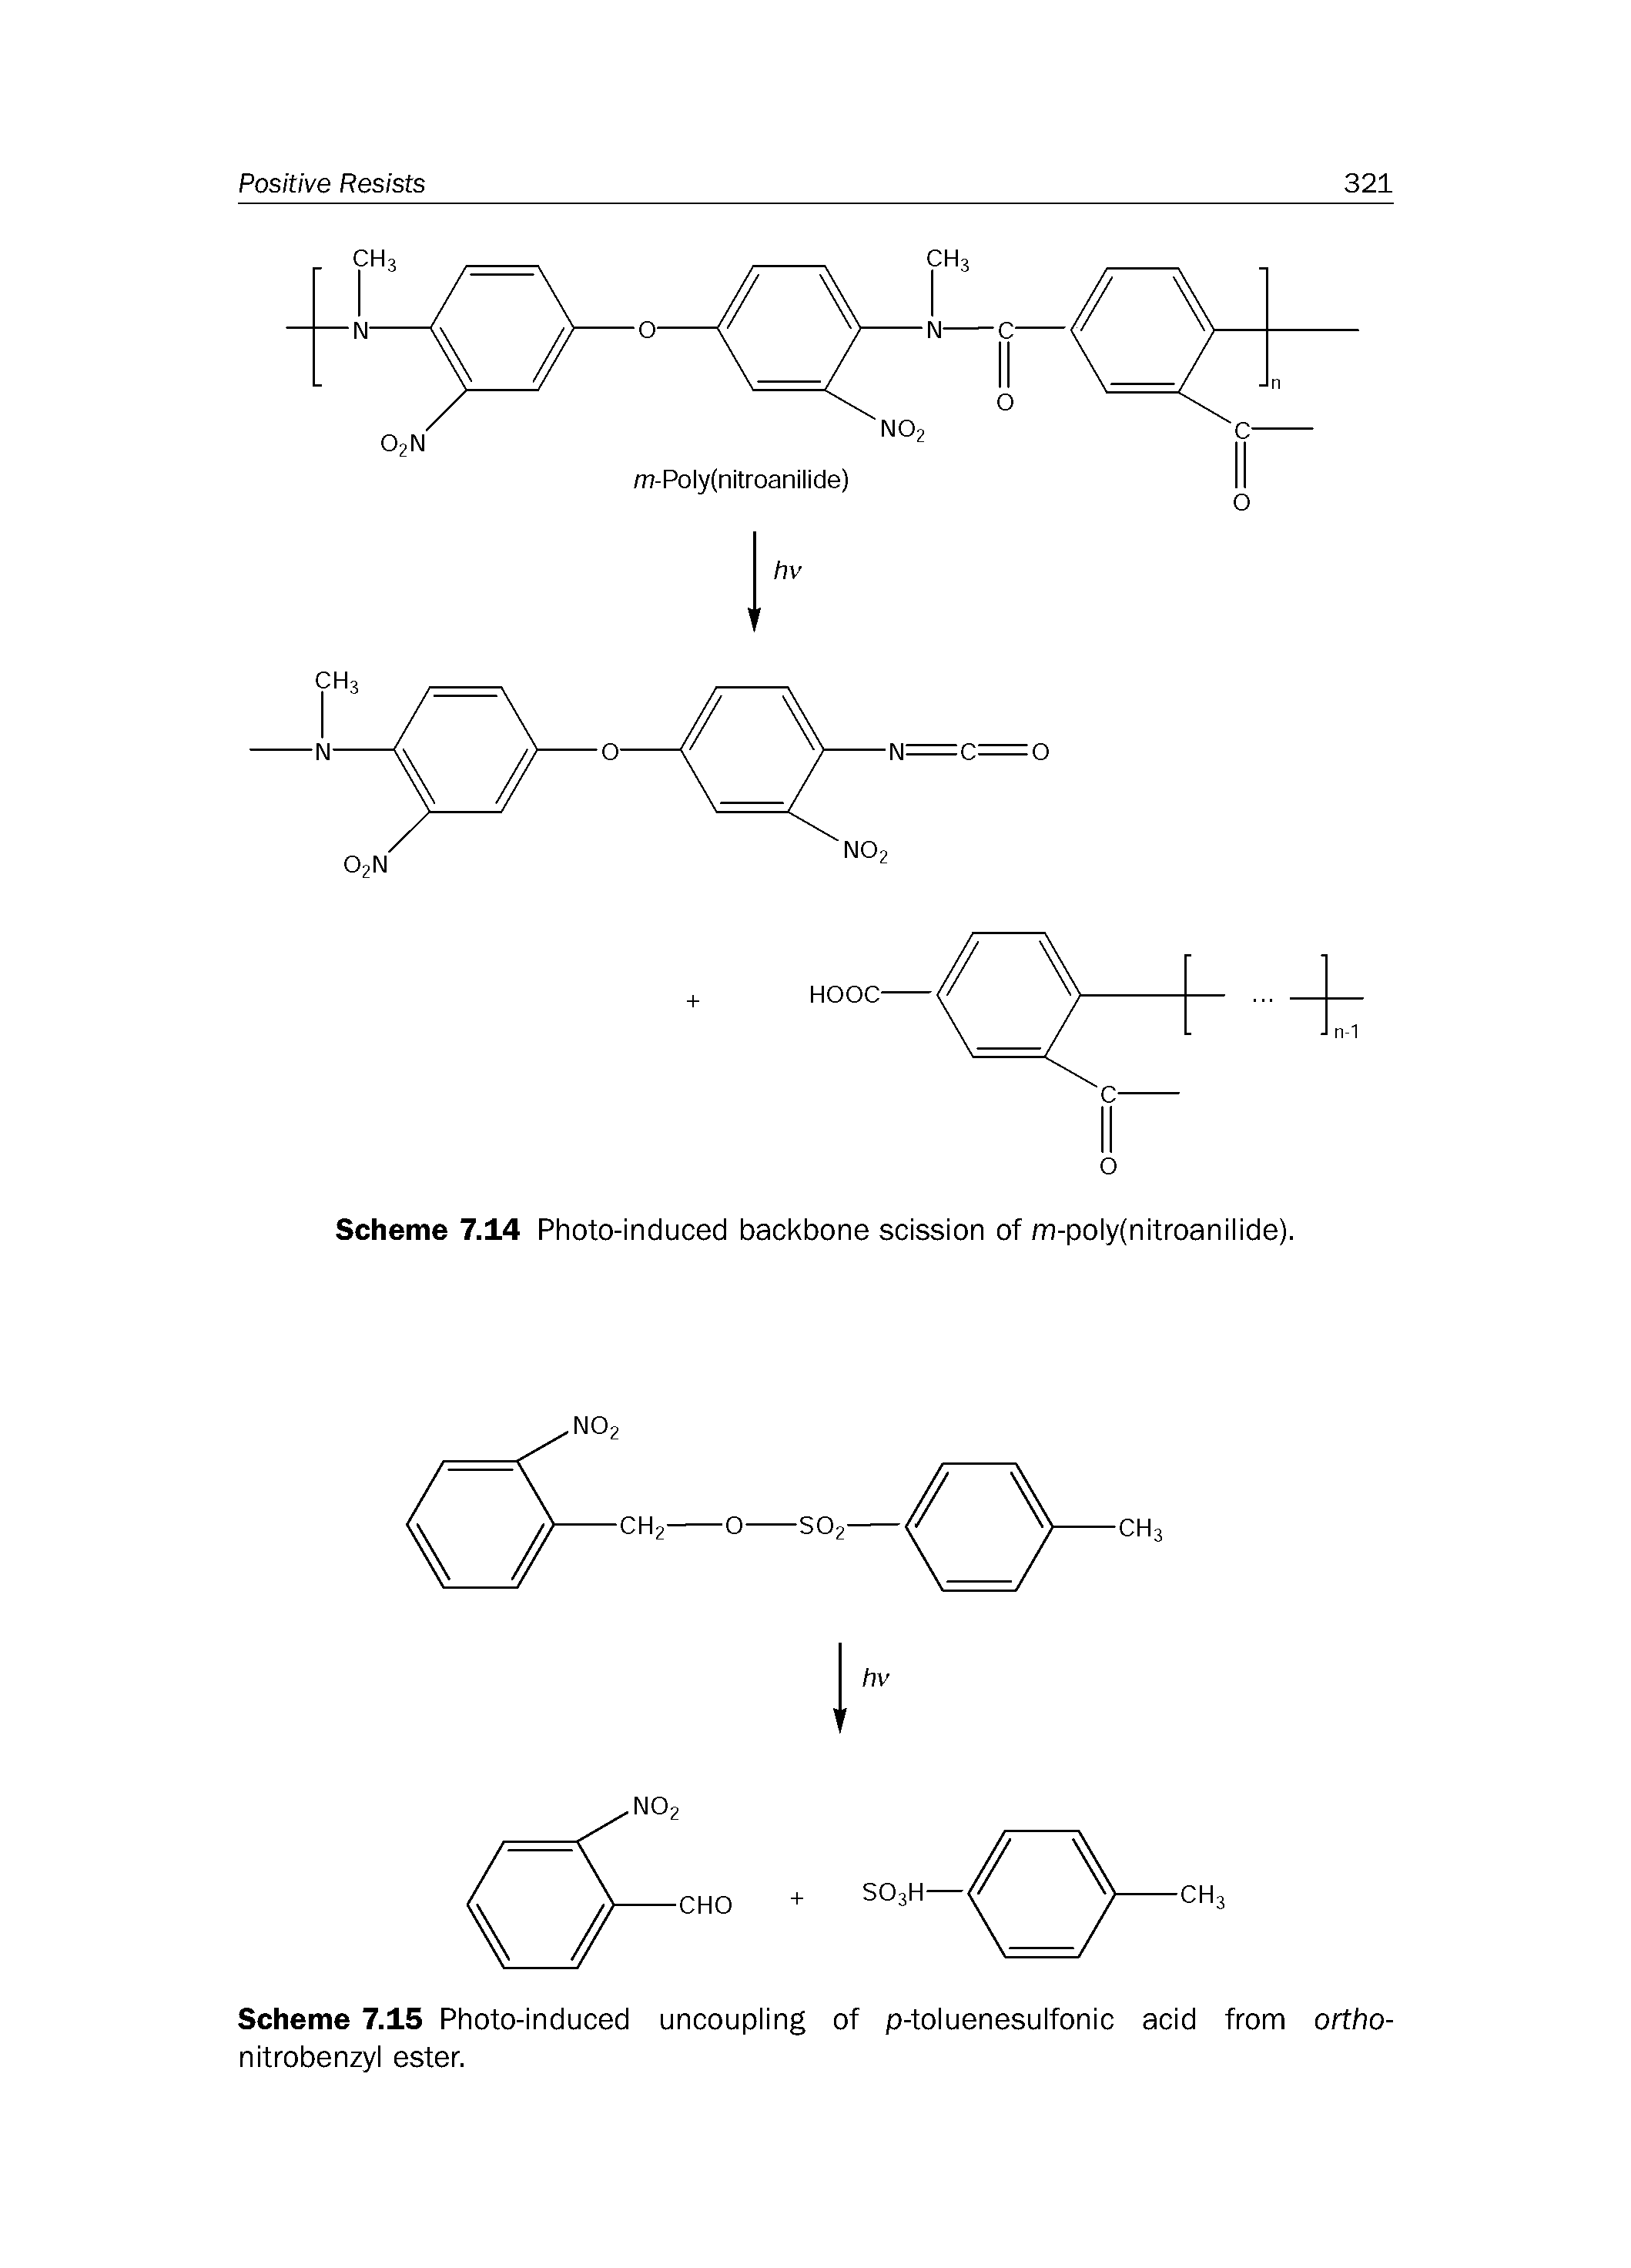 Scheme 7.15 Photo-induced uncoupling of p-toluenesulfonic acid from ortho-nitrobenzyl ester.